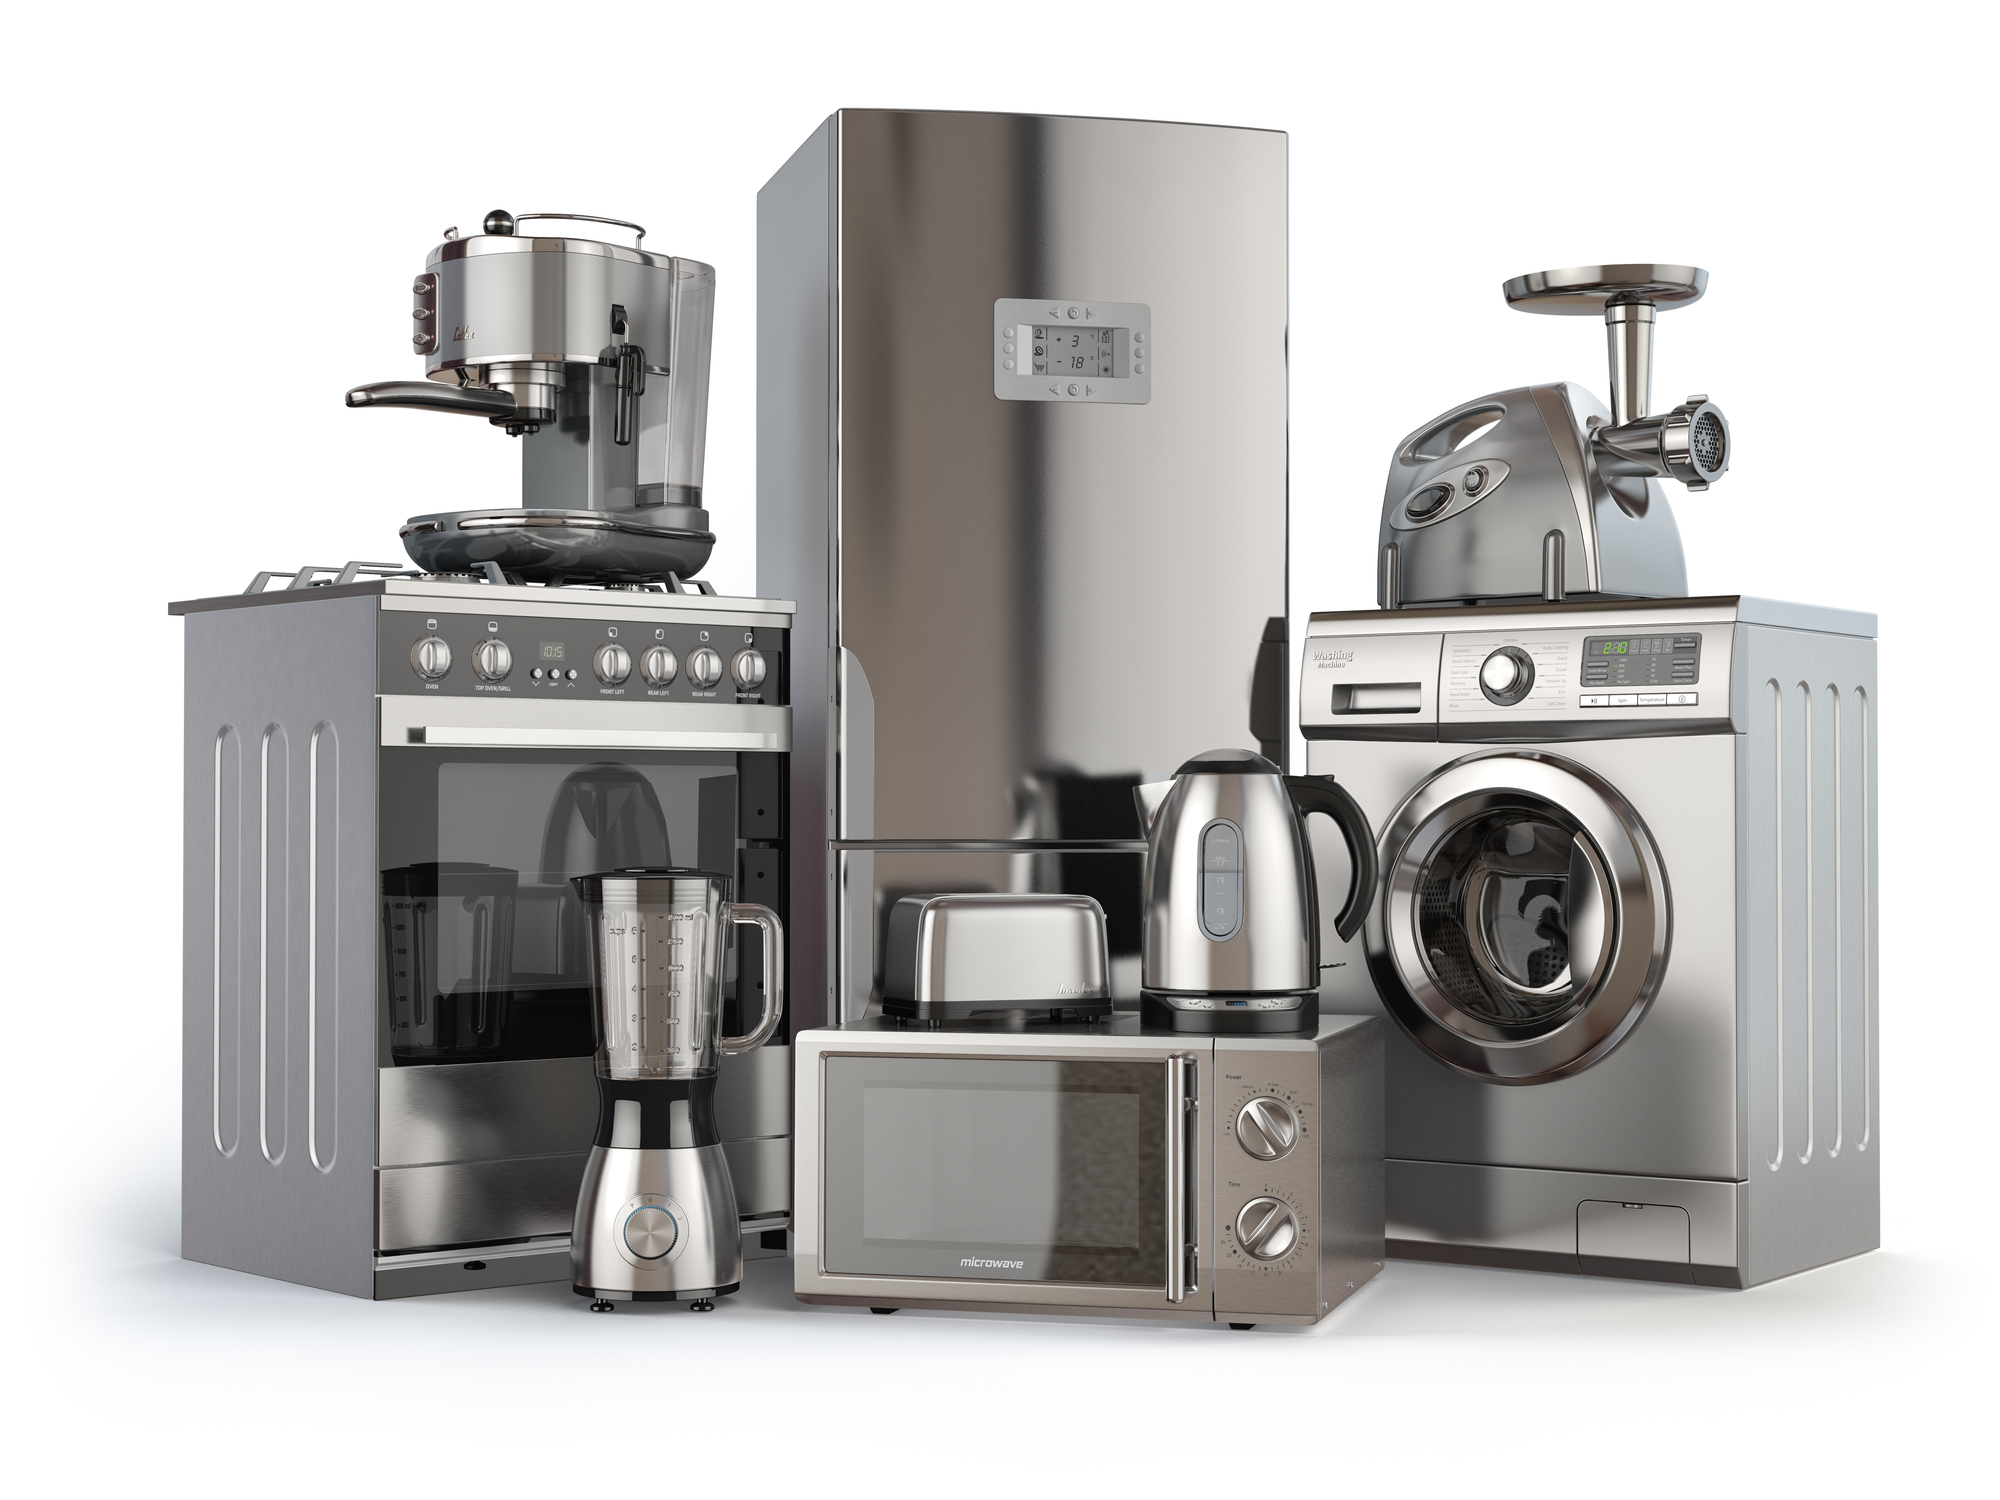 Stainless steel coffee maker, range, blender, refrigerator, toaster, coffee carafe, dryer